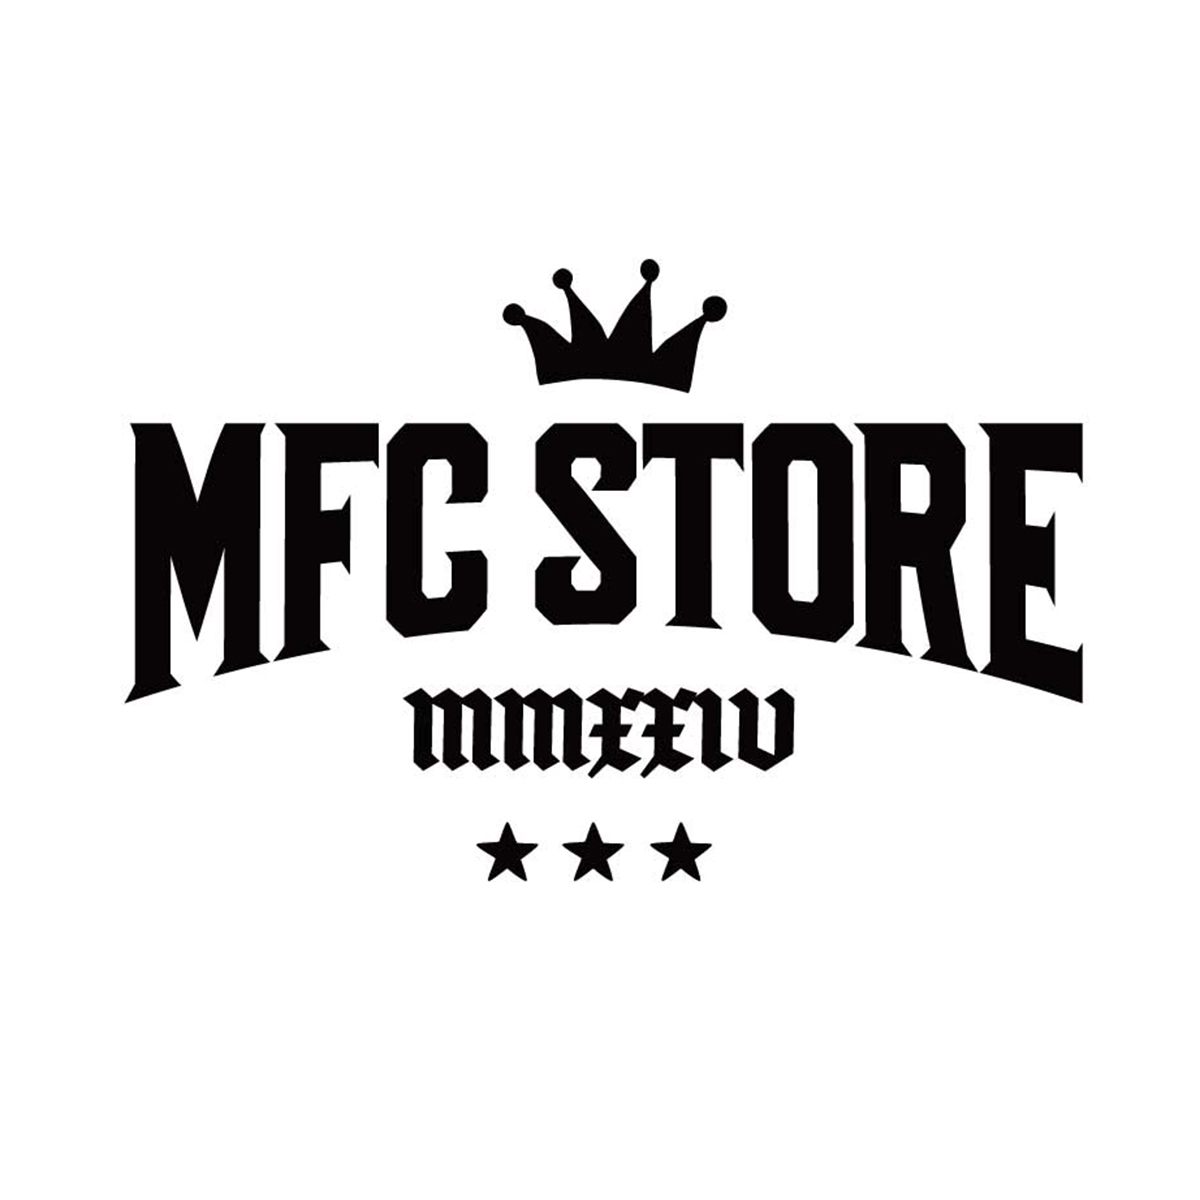 MFC STORE ORIGINAL